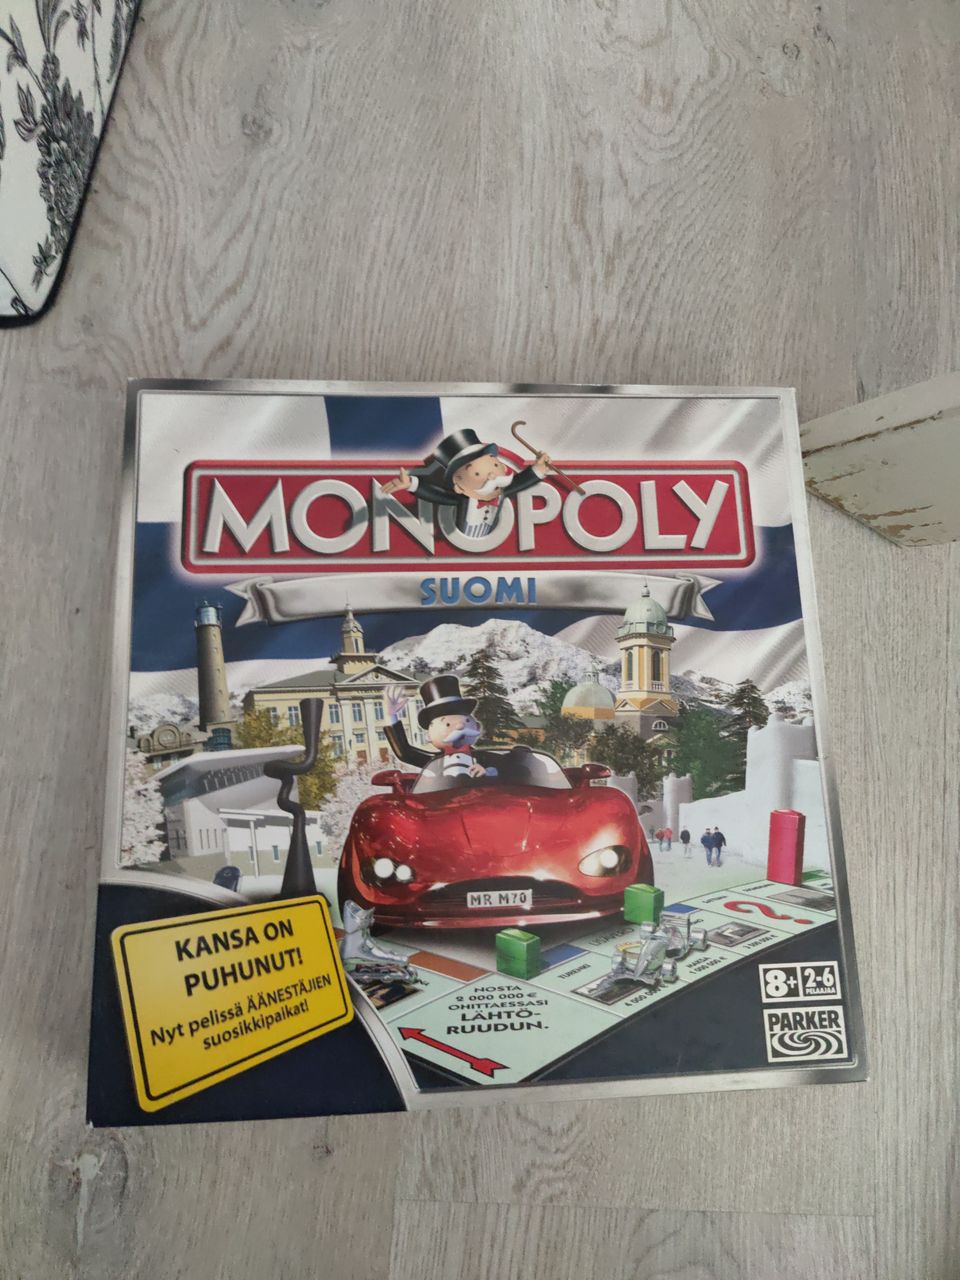 Monopoly Suomi